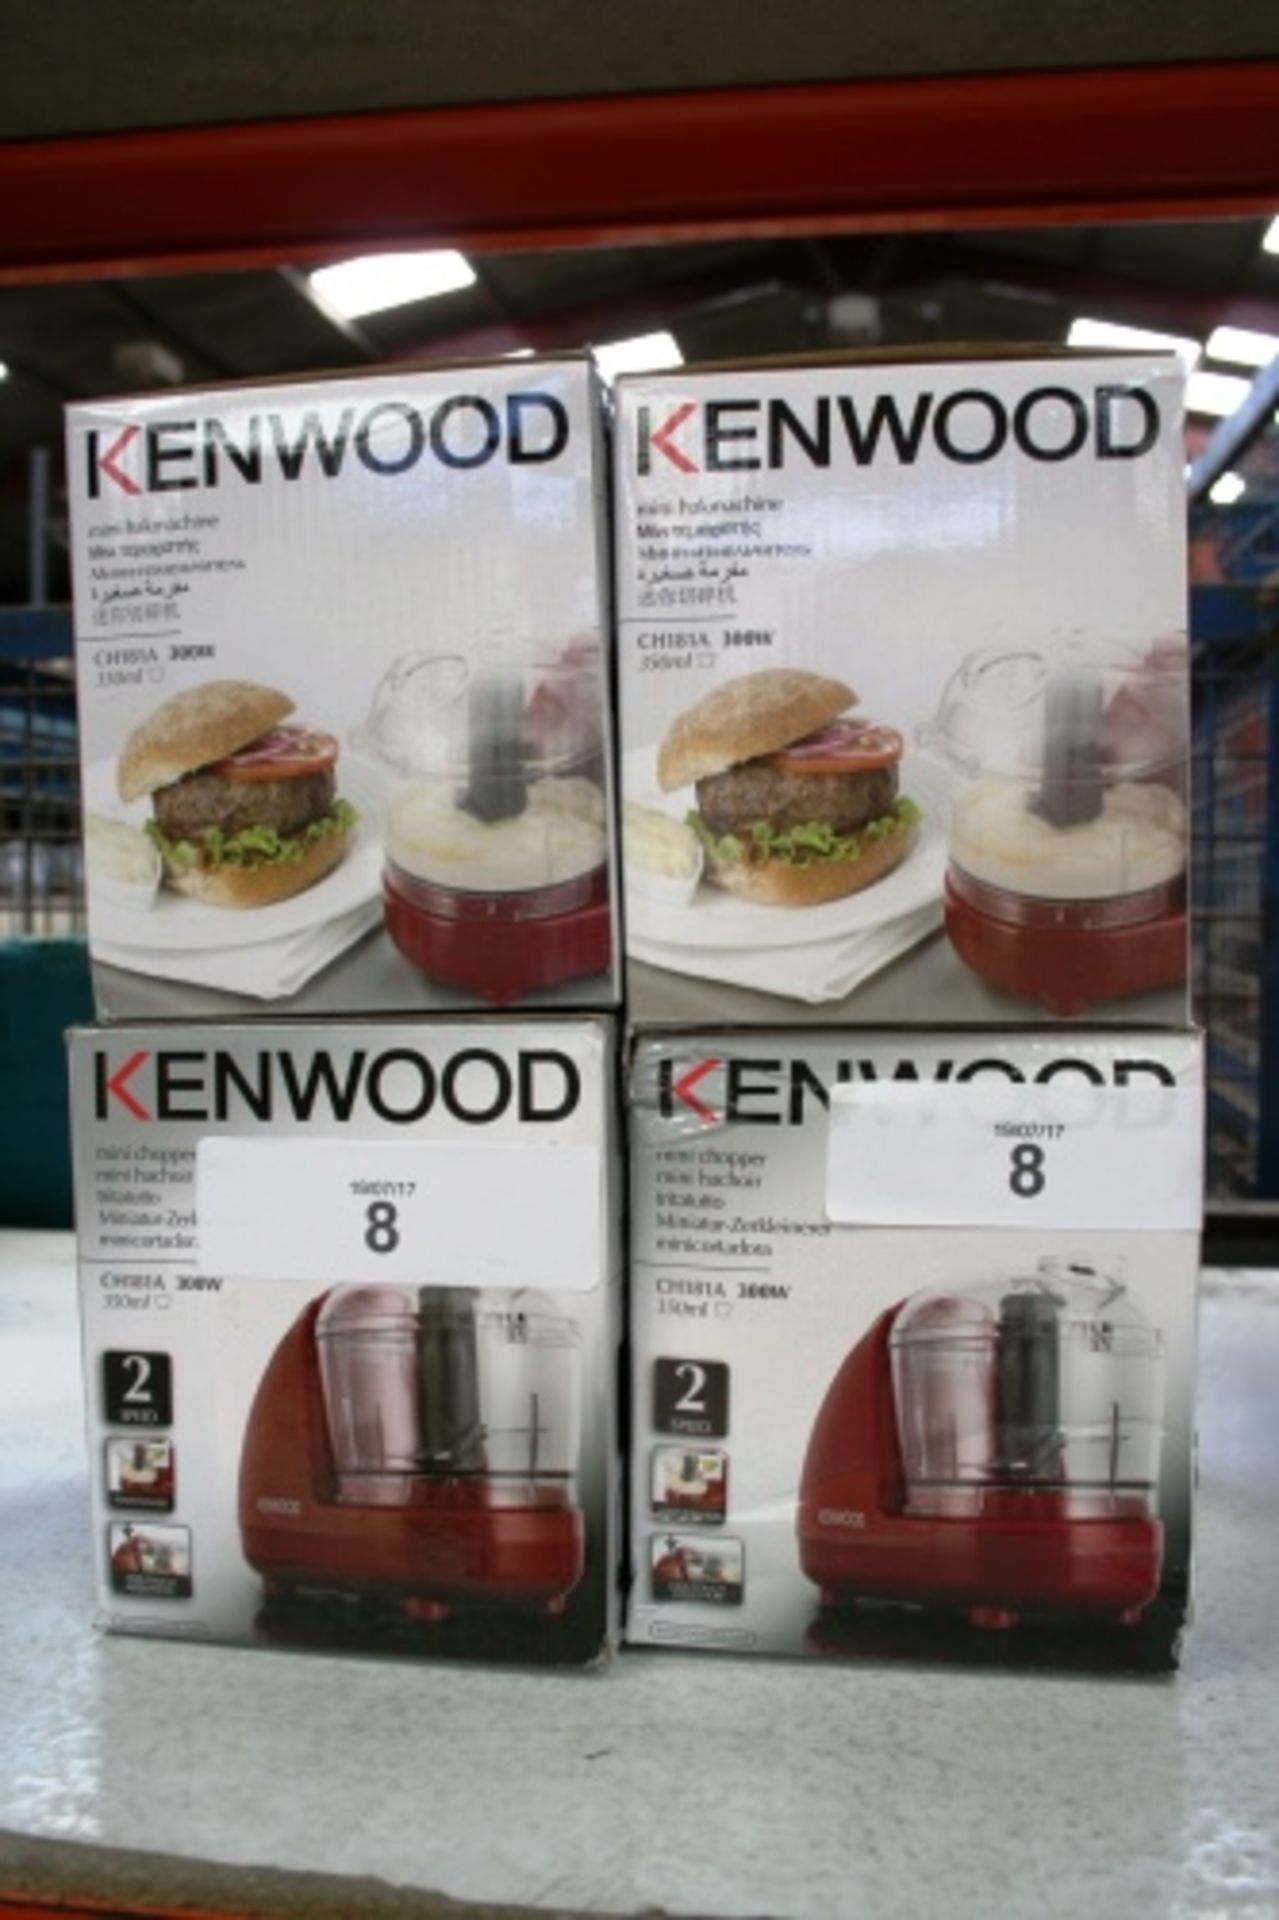 4 x Kenwood mini choppers, 300W, 240V, 350ml capacity, CH181A - New in box (ESB1)